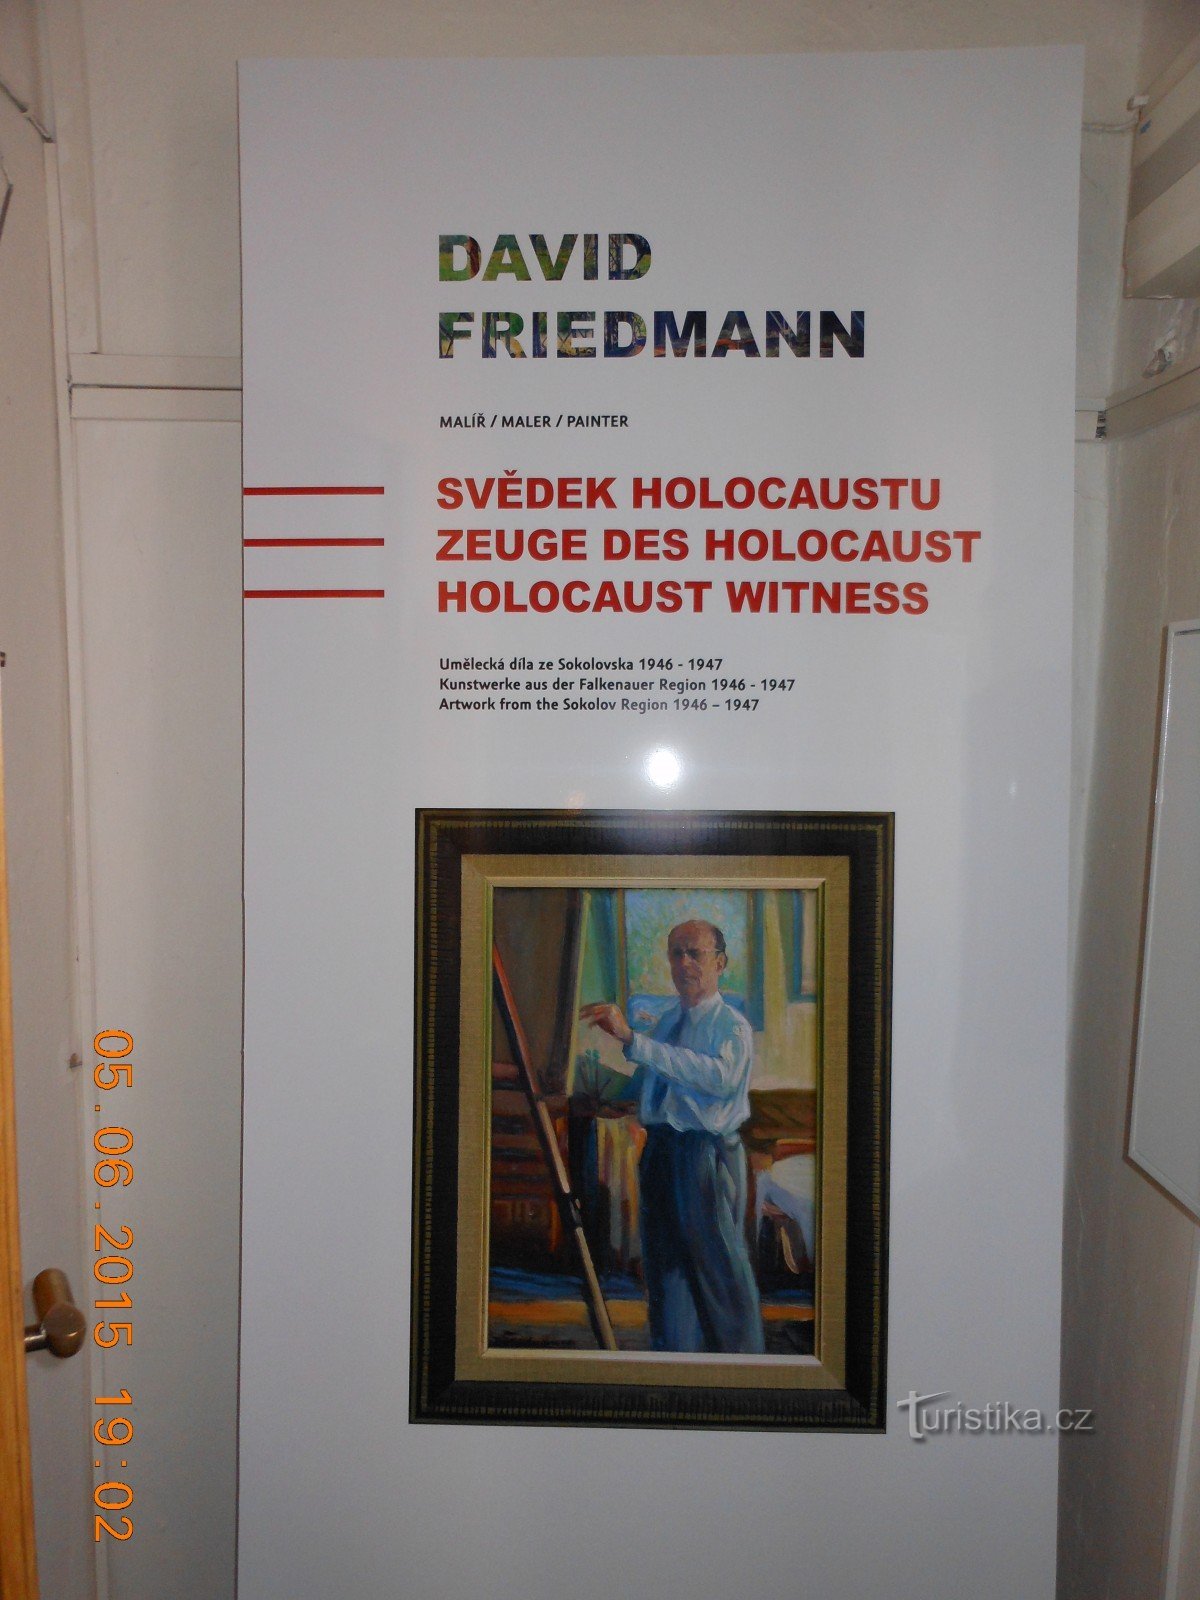 Tentoonstelling DAVID FRIEDMANN - Sokolov Museum